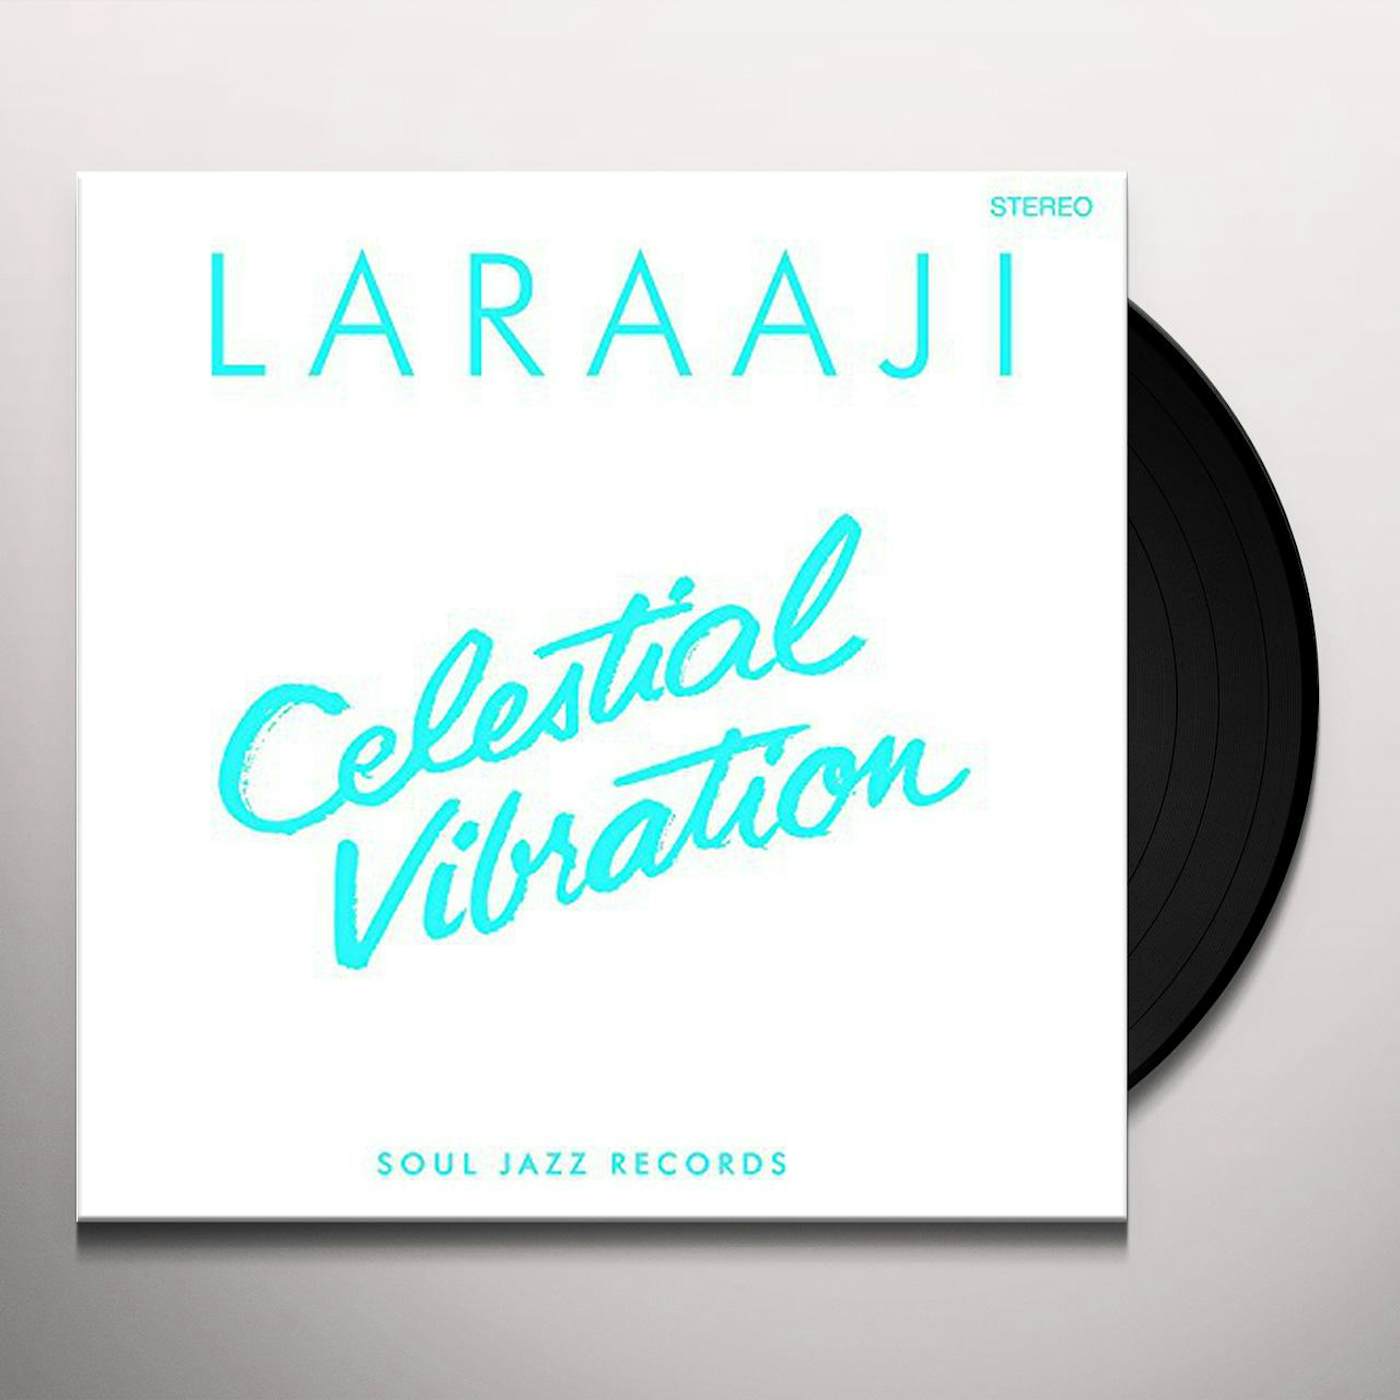 Laraaji Celestial Vibration Vinyl Record